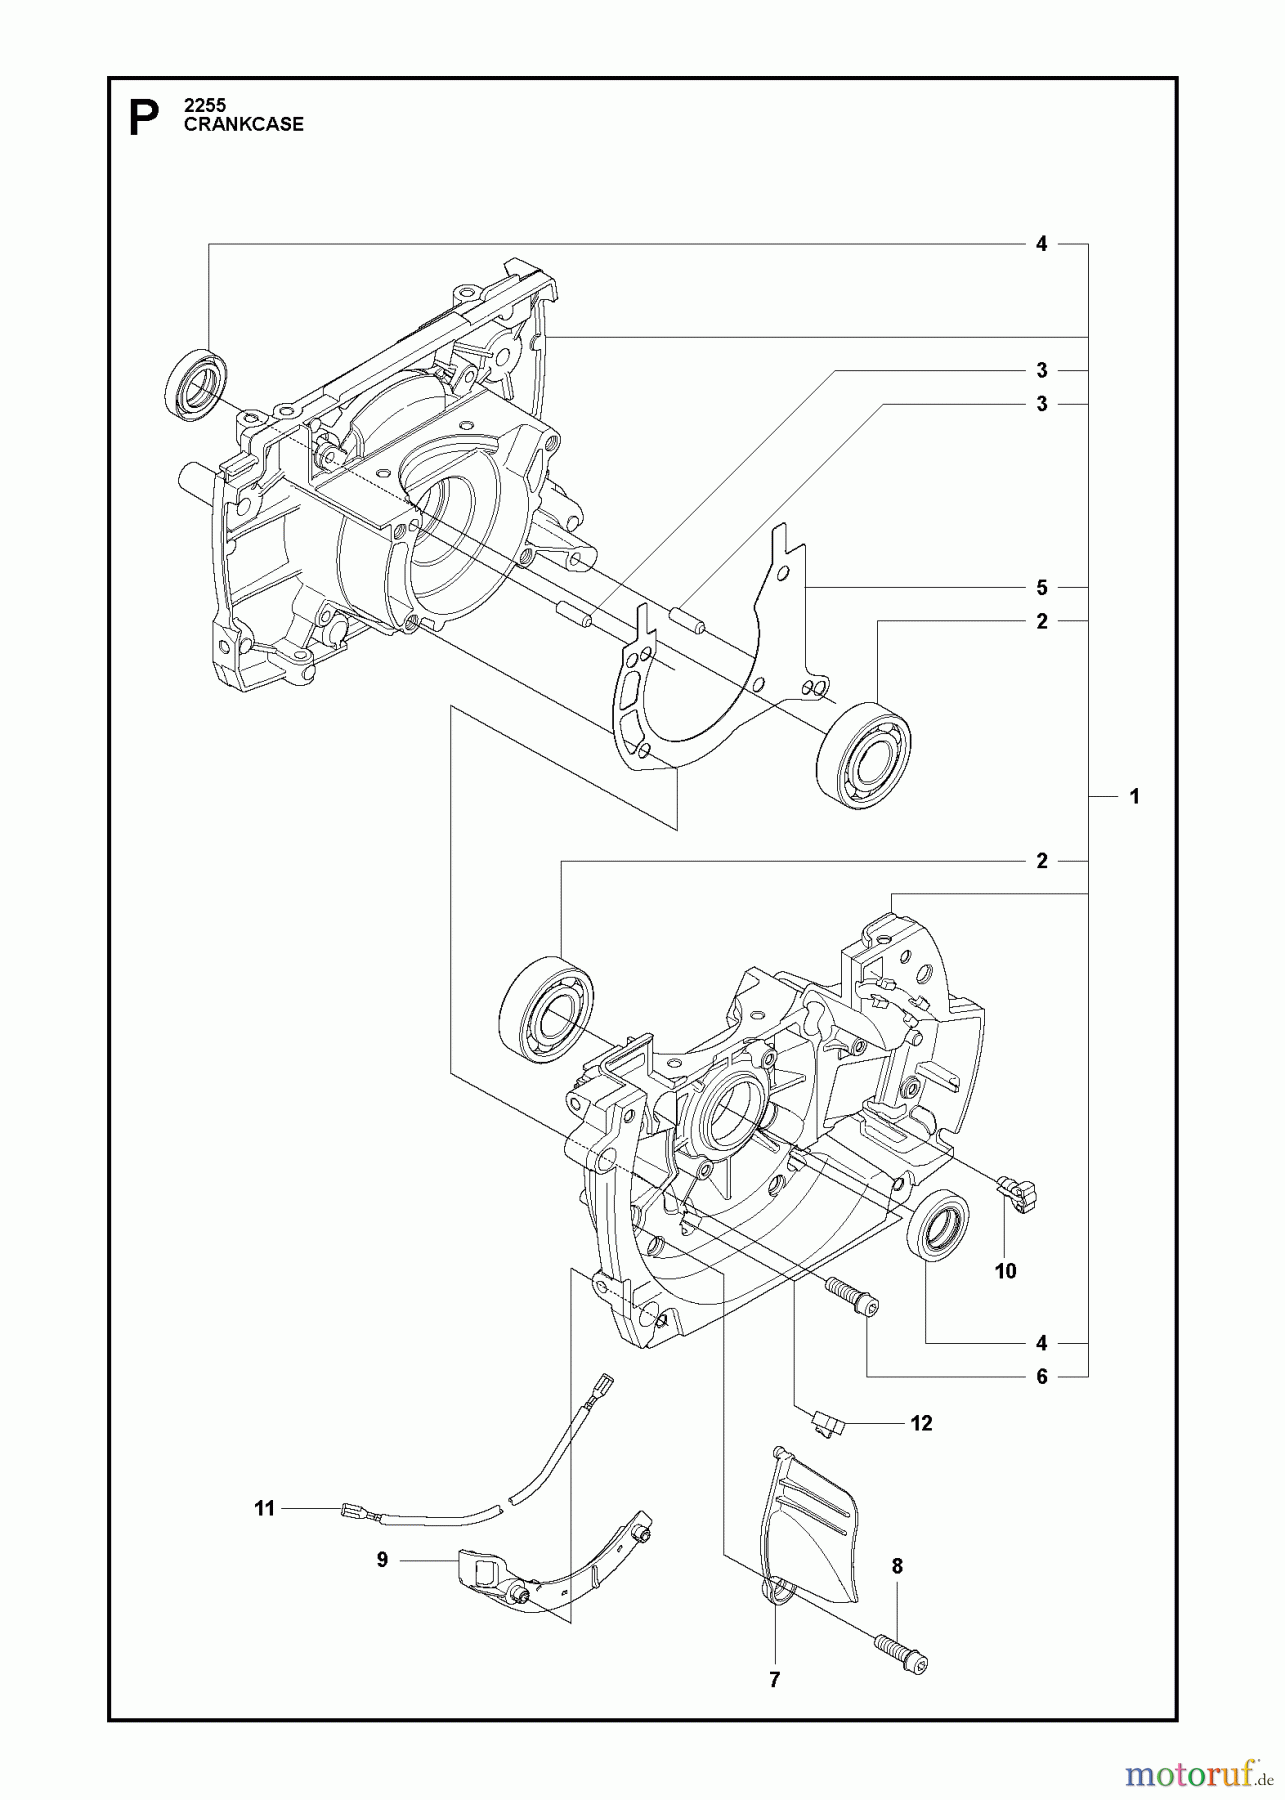  Jonsered Motorsensen, Trimmer BC2255 - Jonsered Brushcutter (2011-01) CRANKCASE